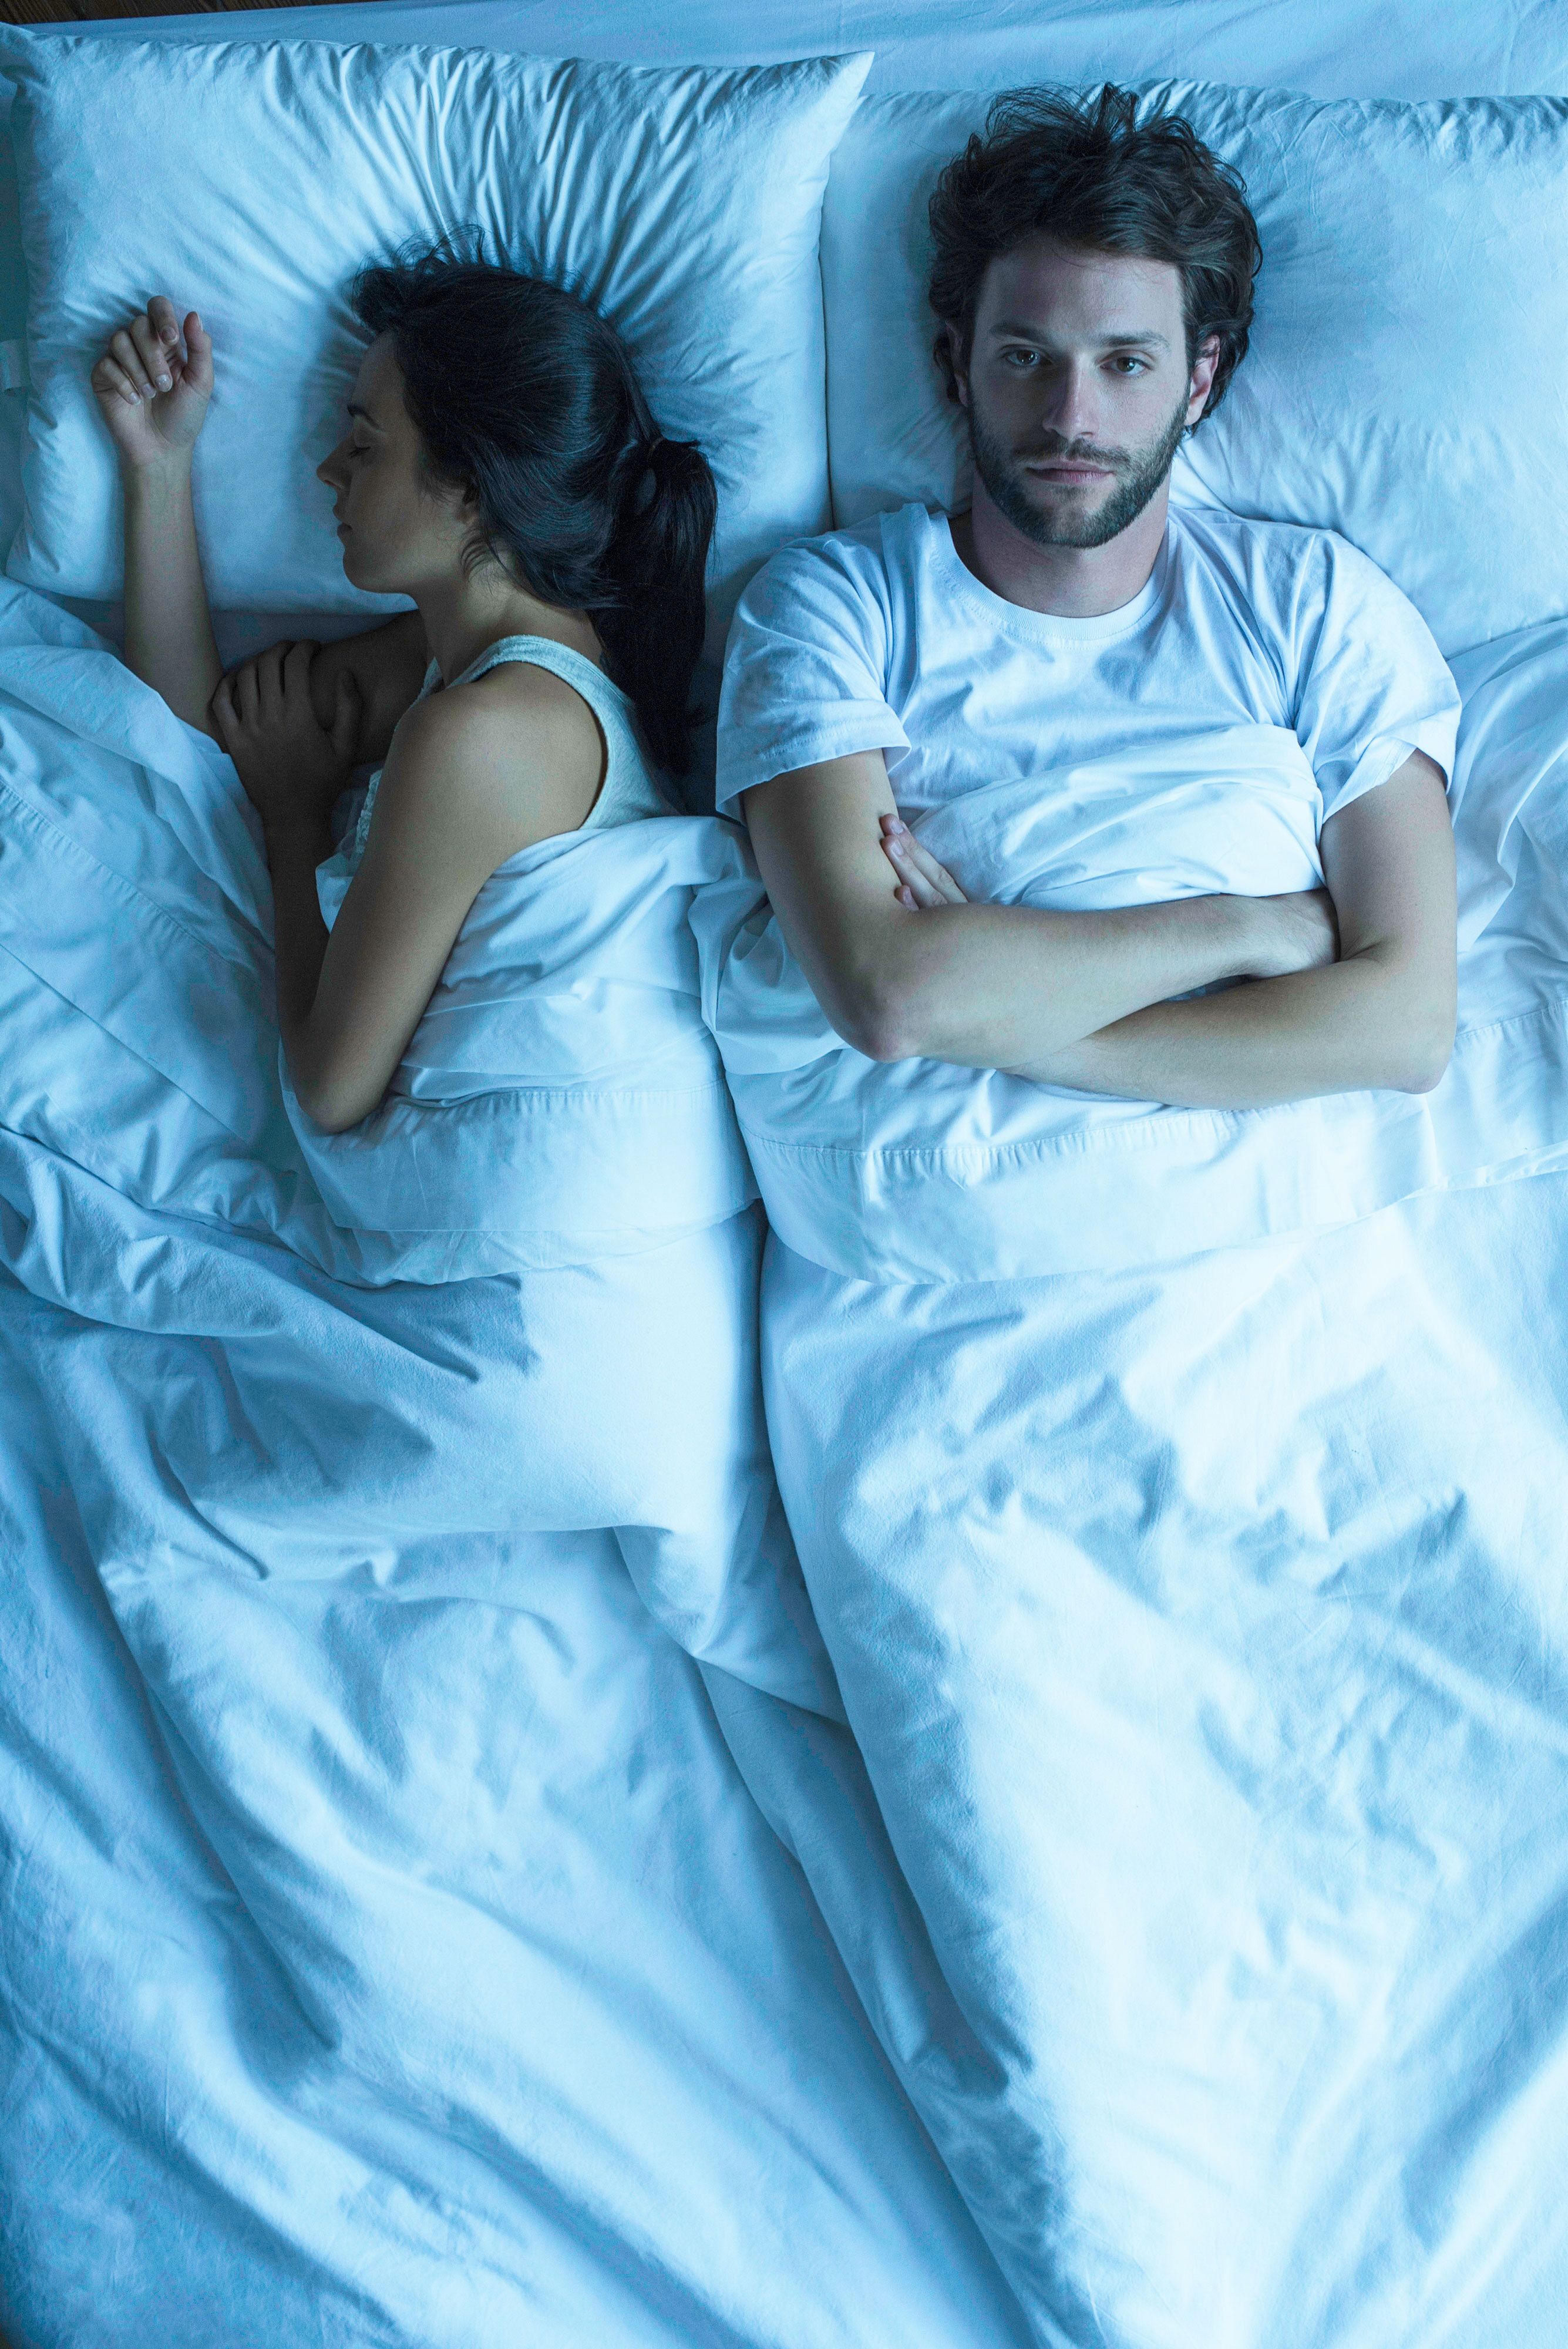 masturbating while girlfriend is sleeping